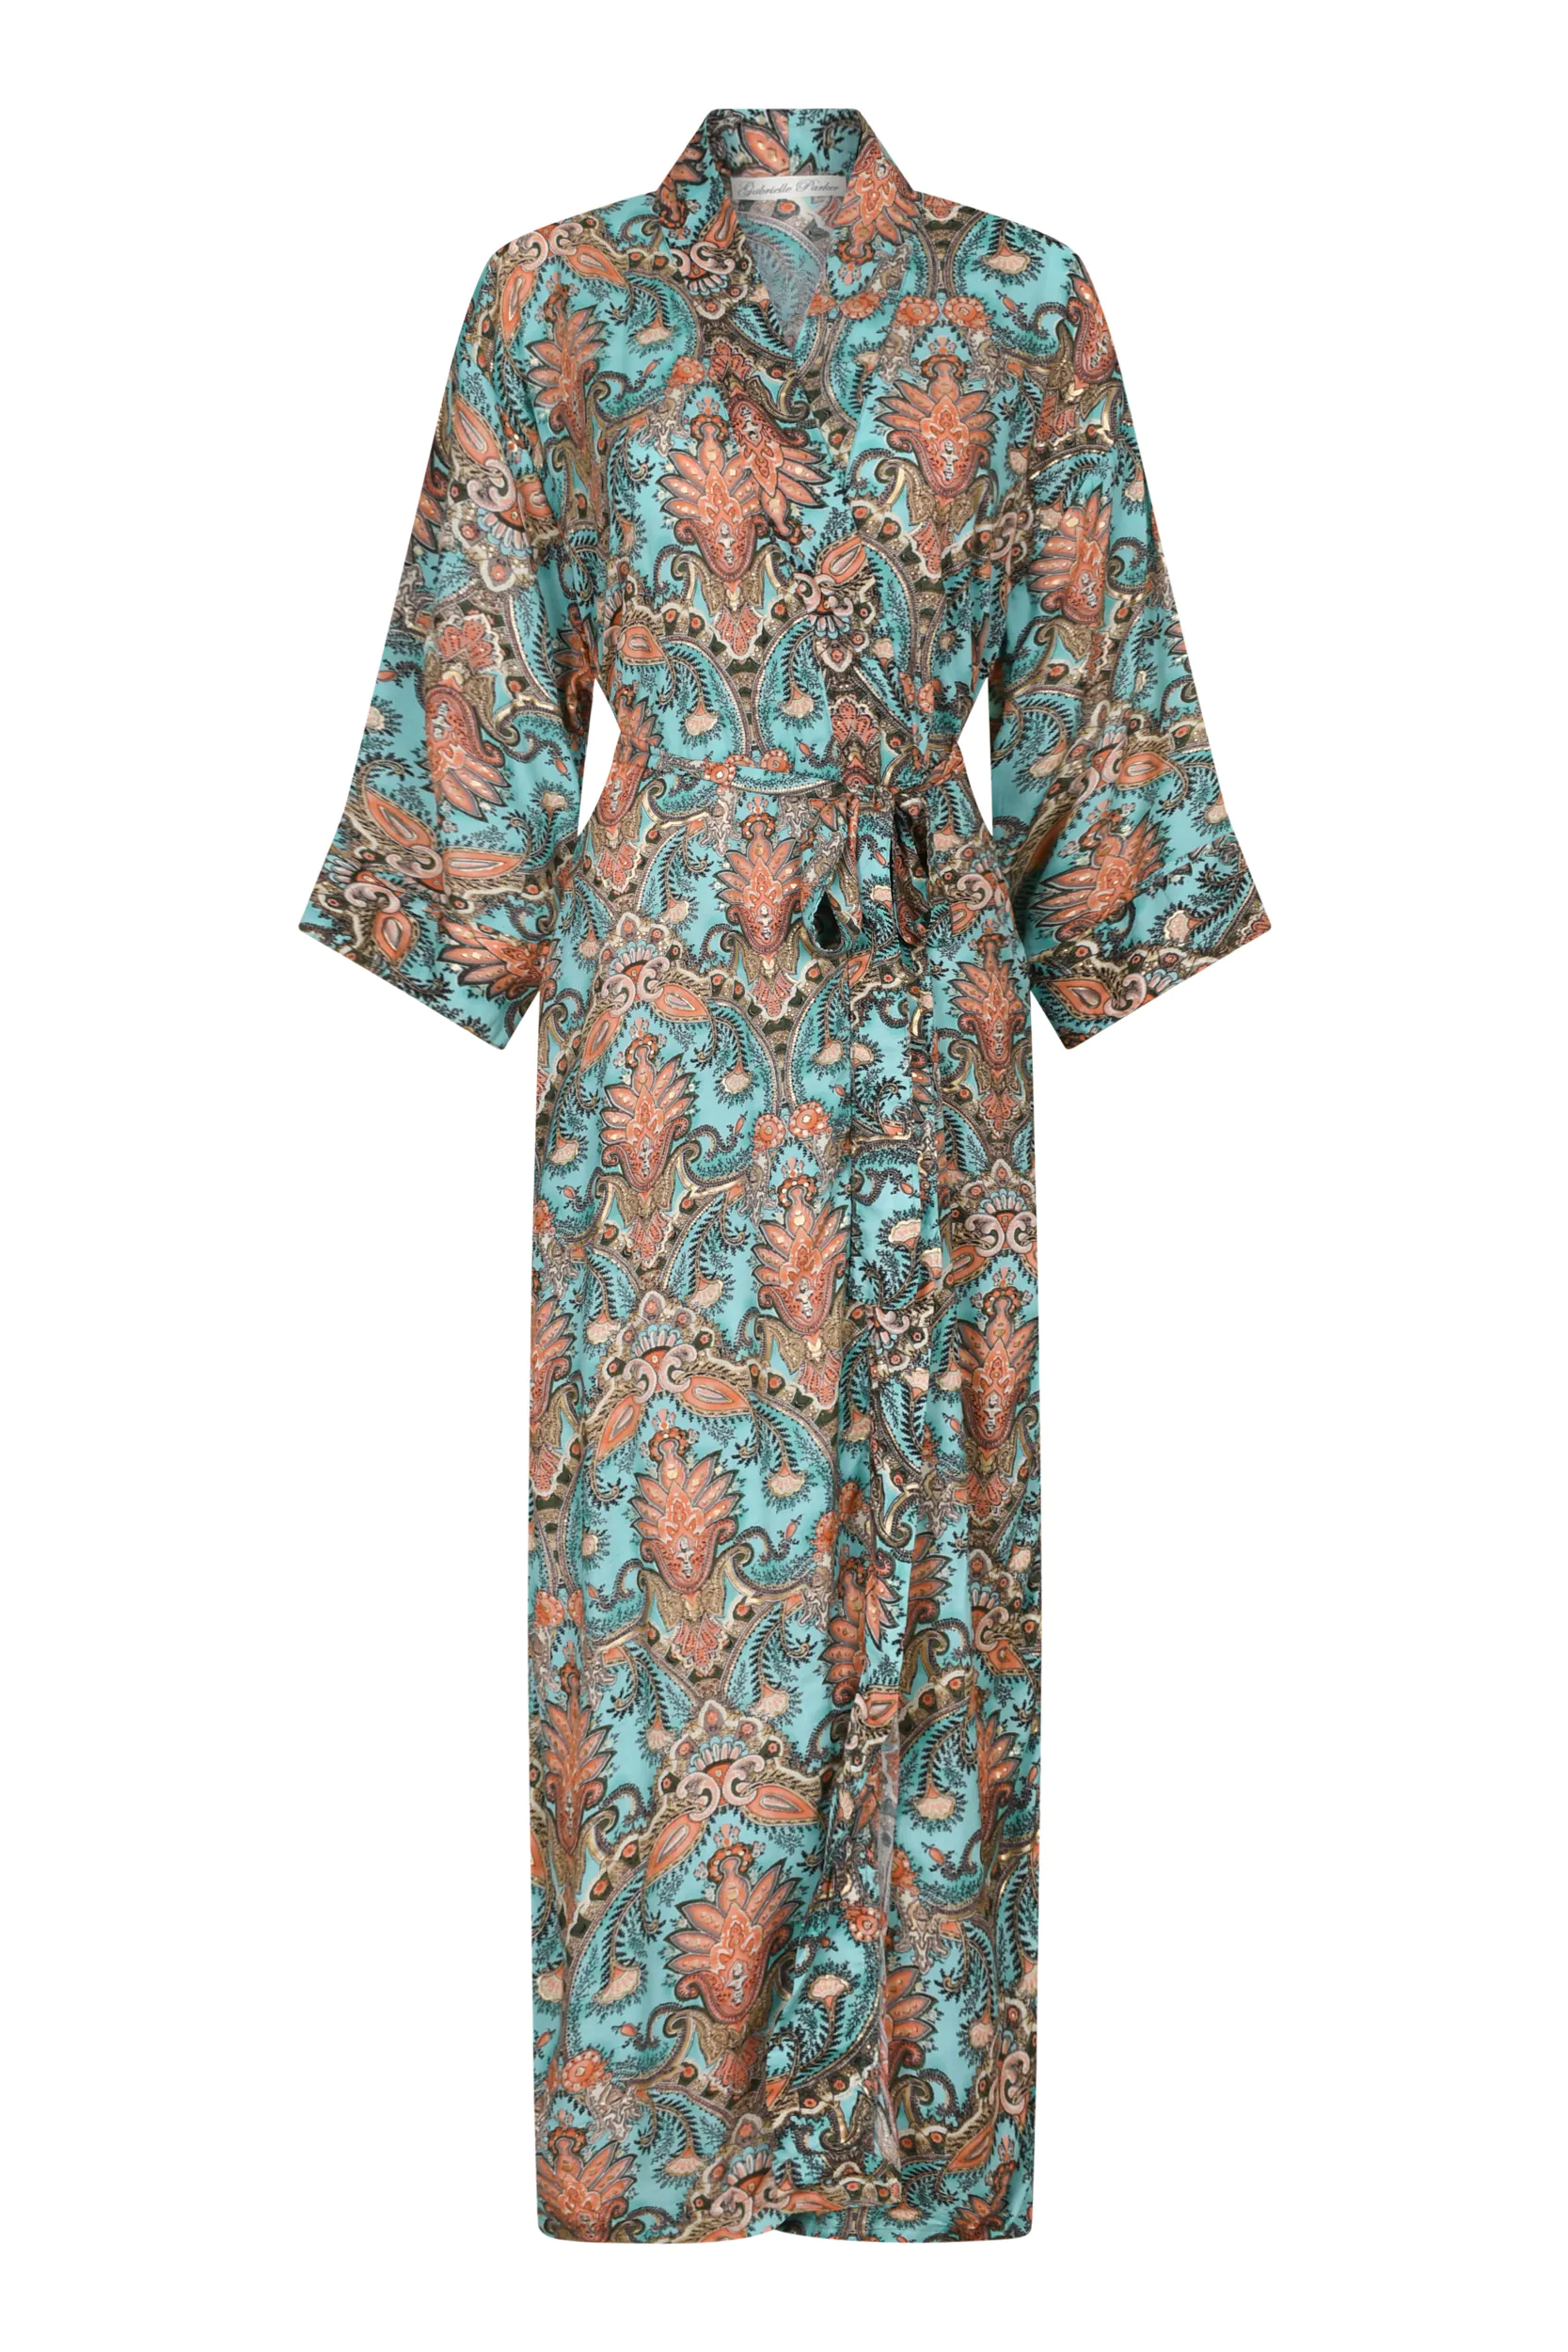 Modal-Kimono-in-Maharani-print-with-Gold